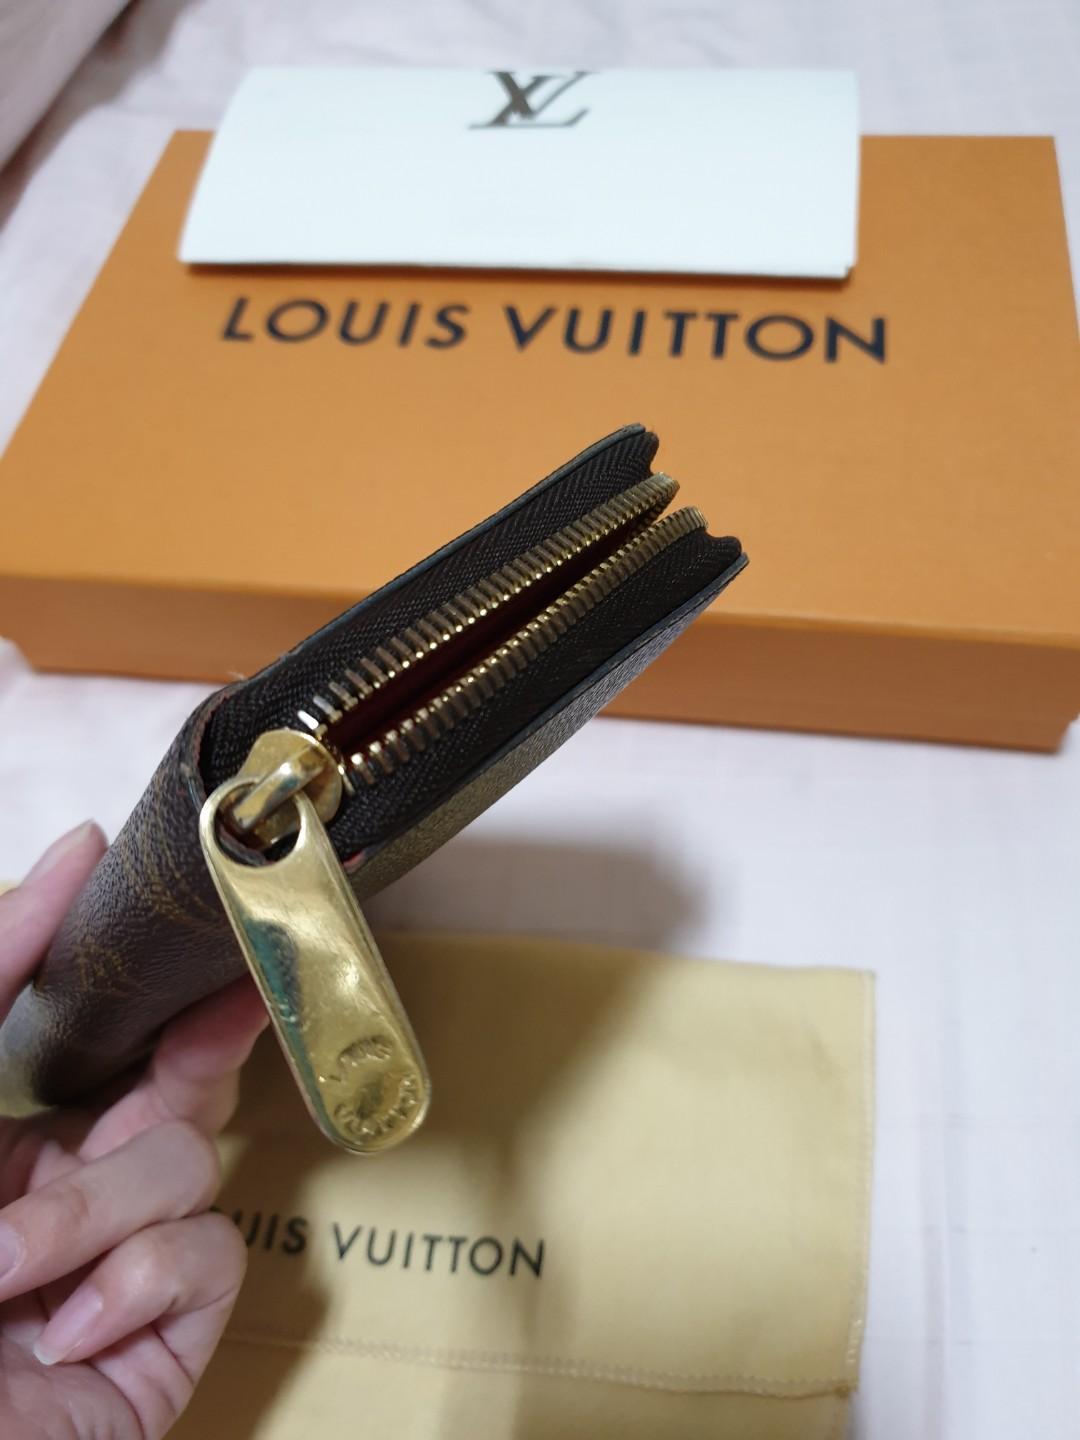 Louis Vuitton Long Wallet M61864 Z.Wallet Nm M.Emp.Noir